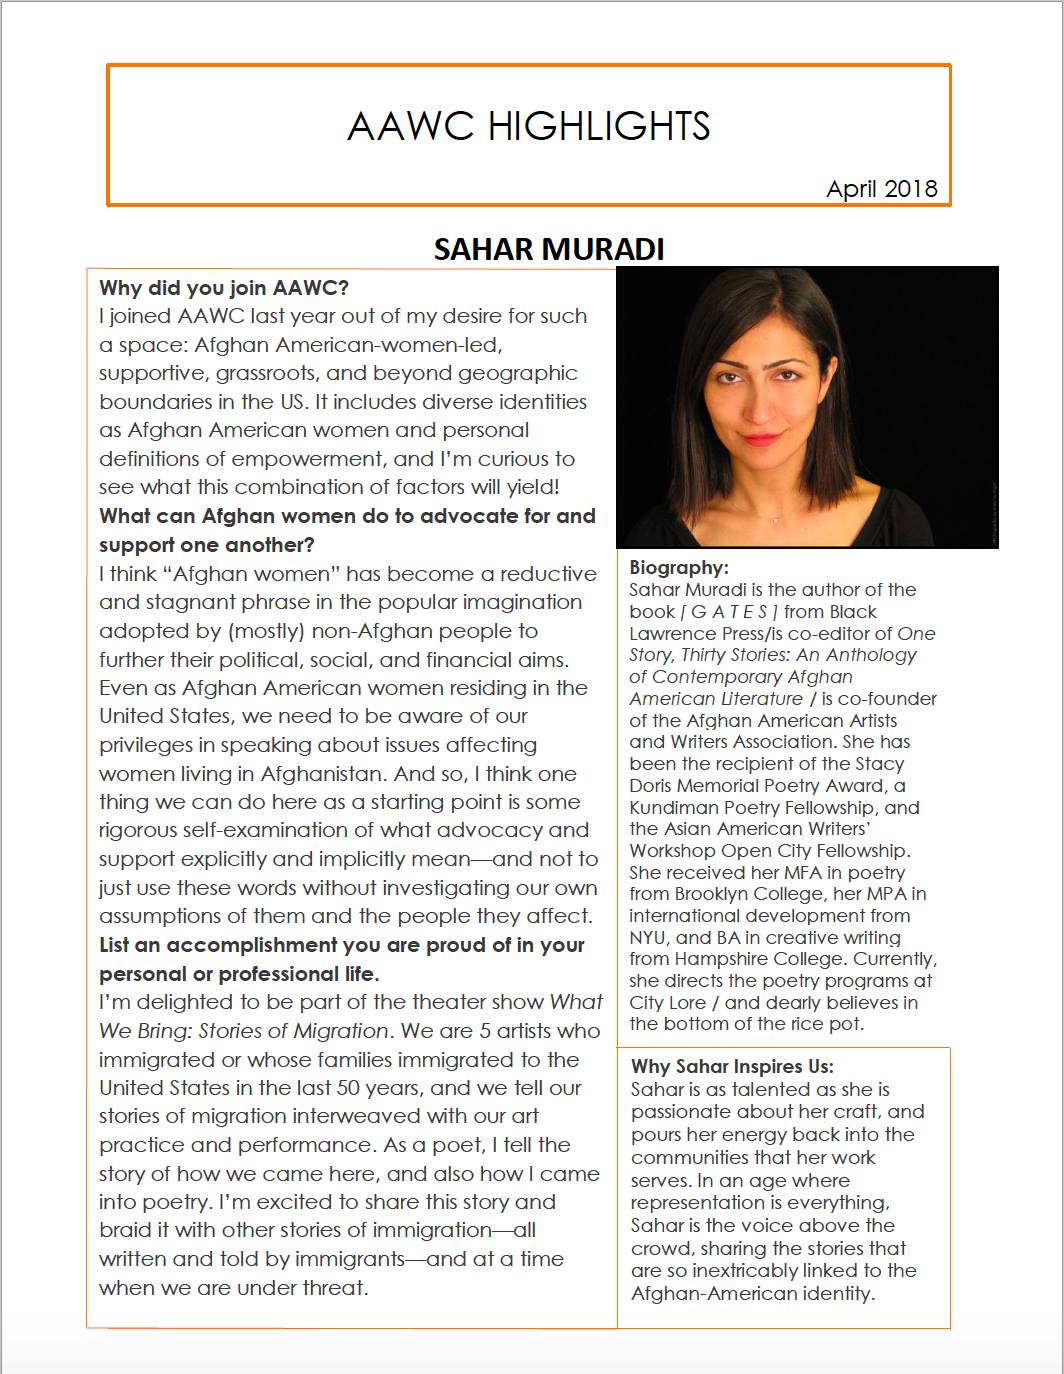 April 2018 Highlight - Sahar Muradi